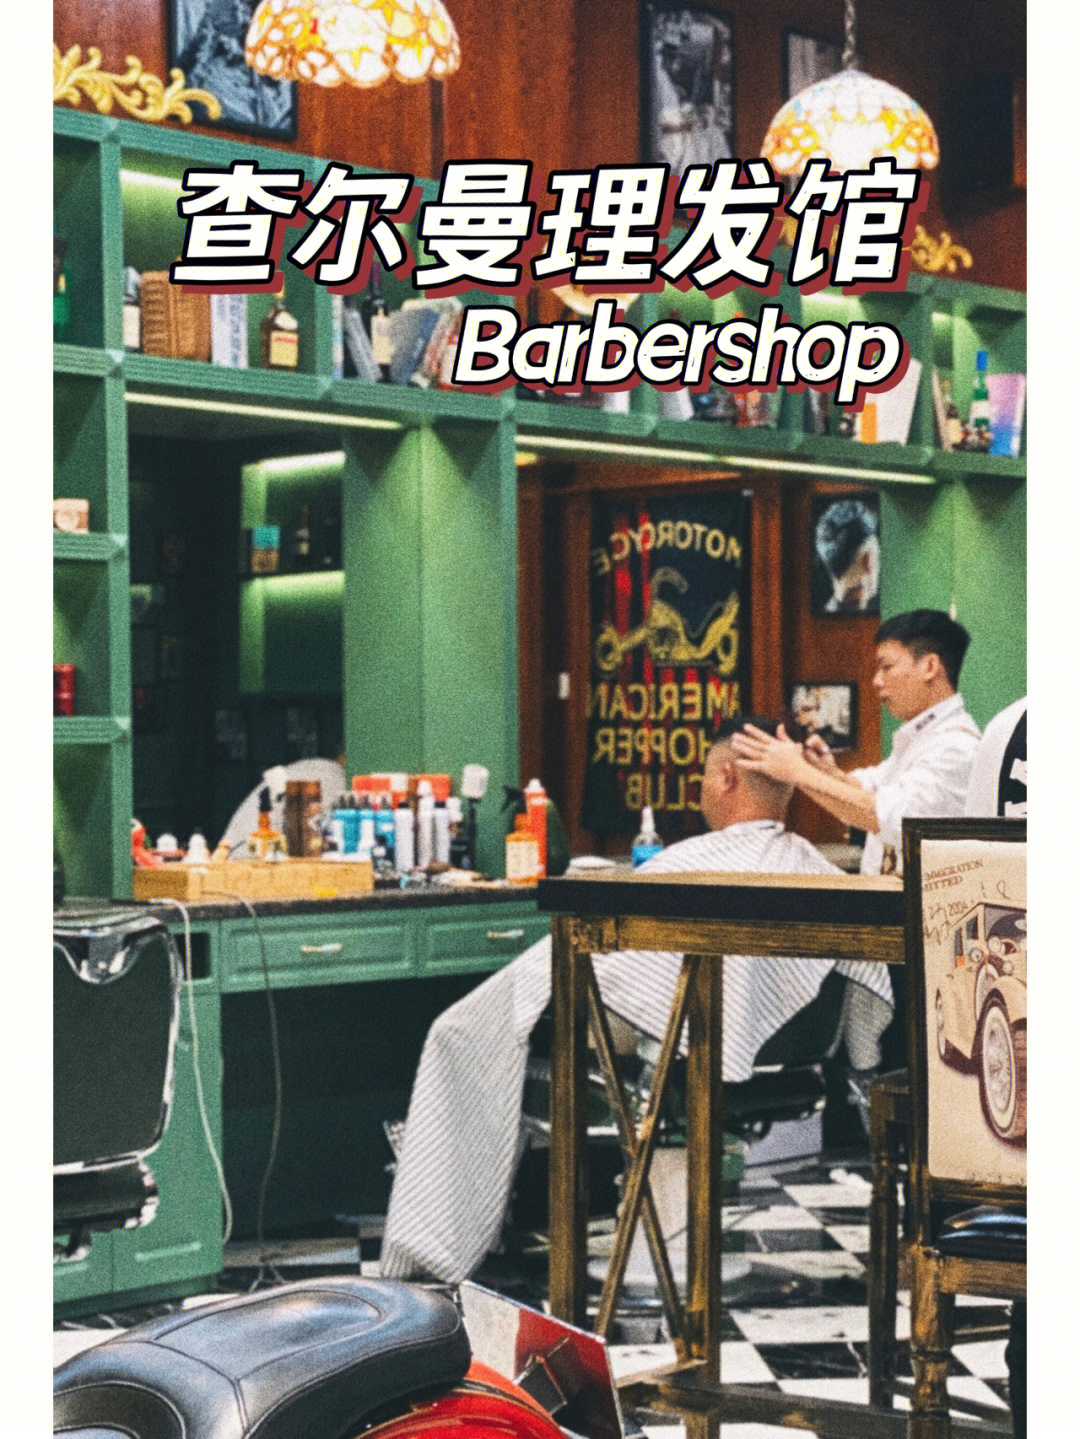 shop基本上第一印象都是油头,其实barber shop是指一个注重为男士服务